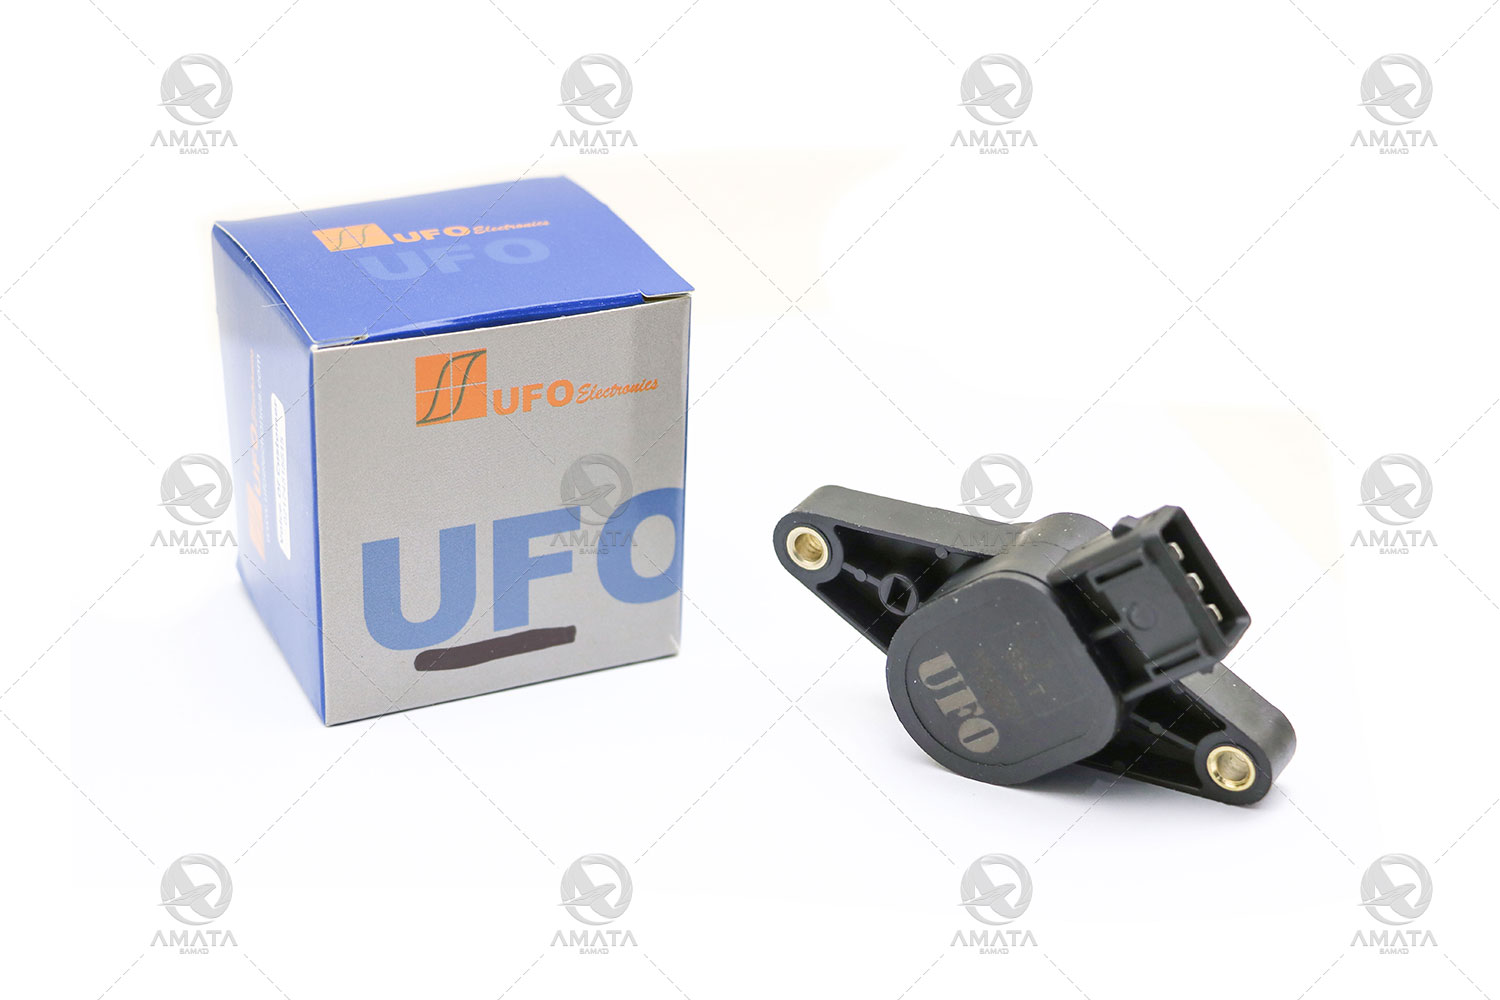 1108093    -    پتانسیومتر پژو 405 (SSAT) UFO